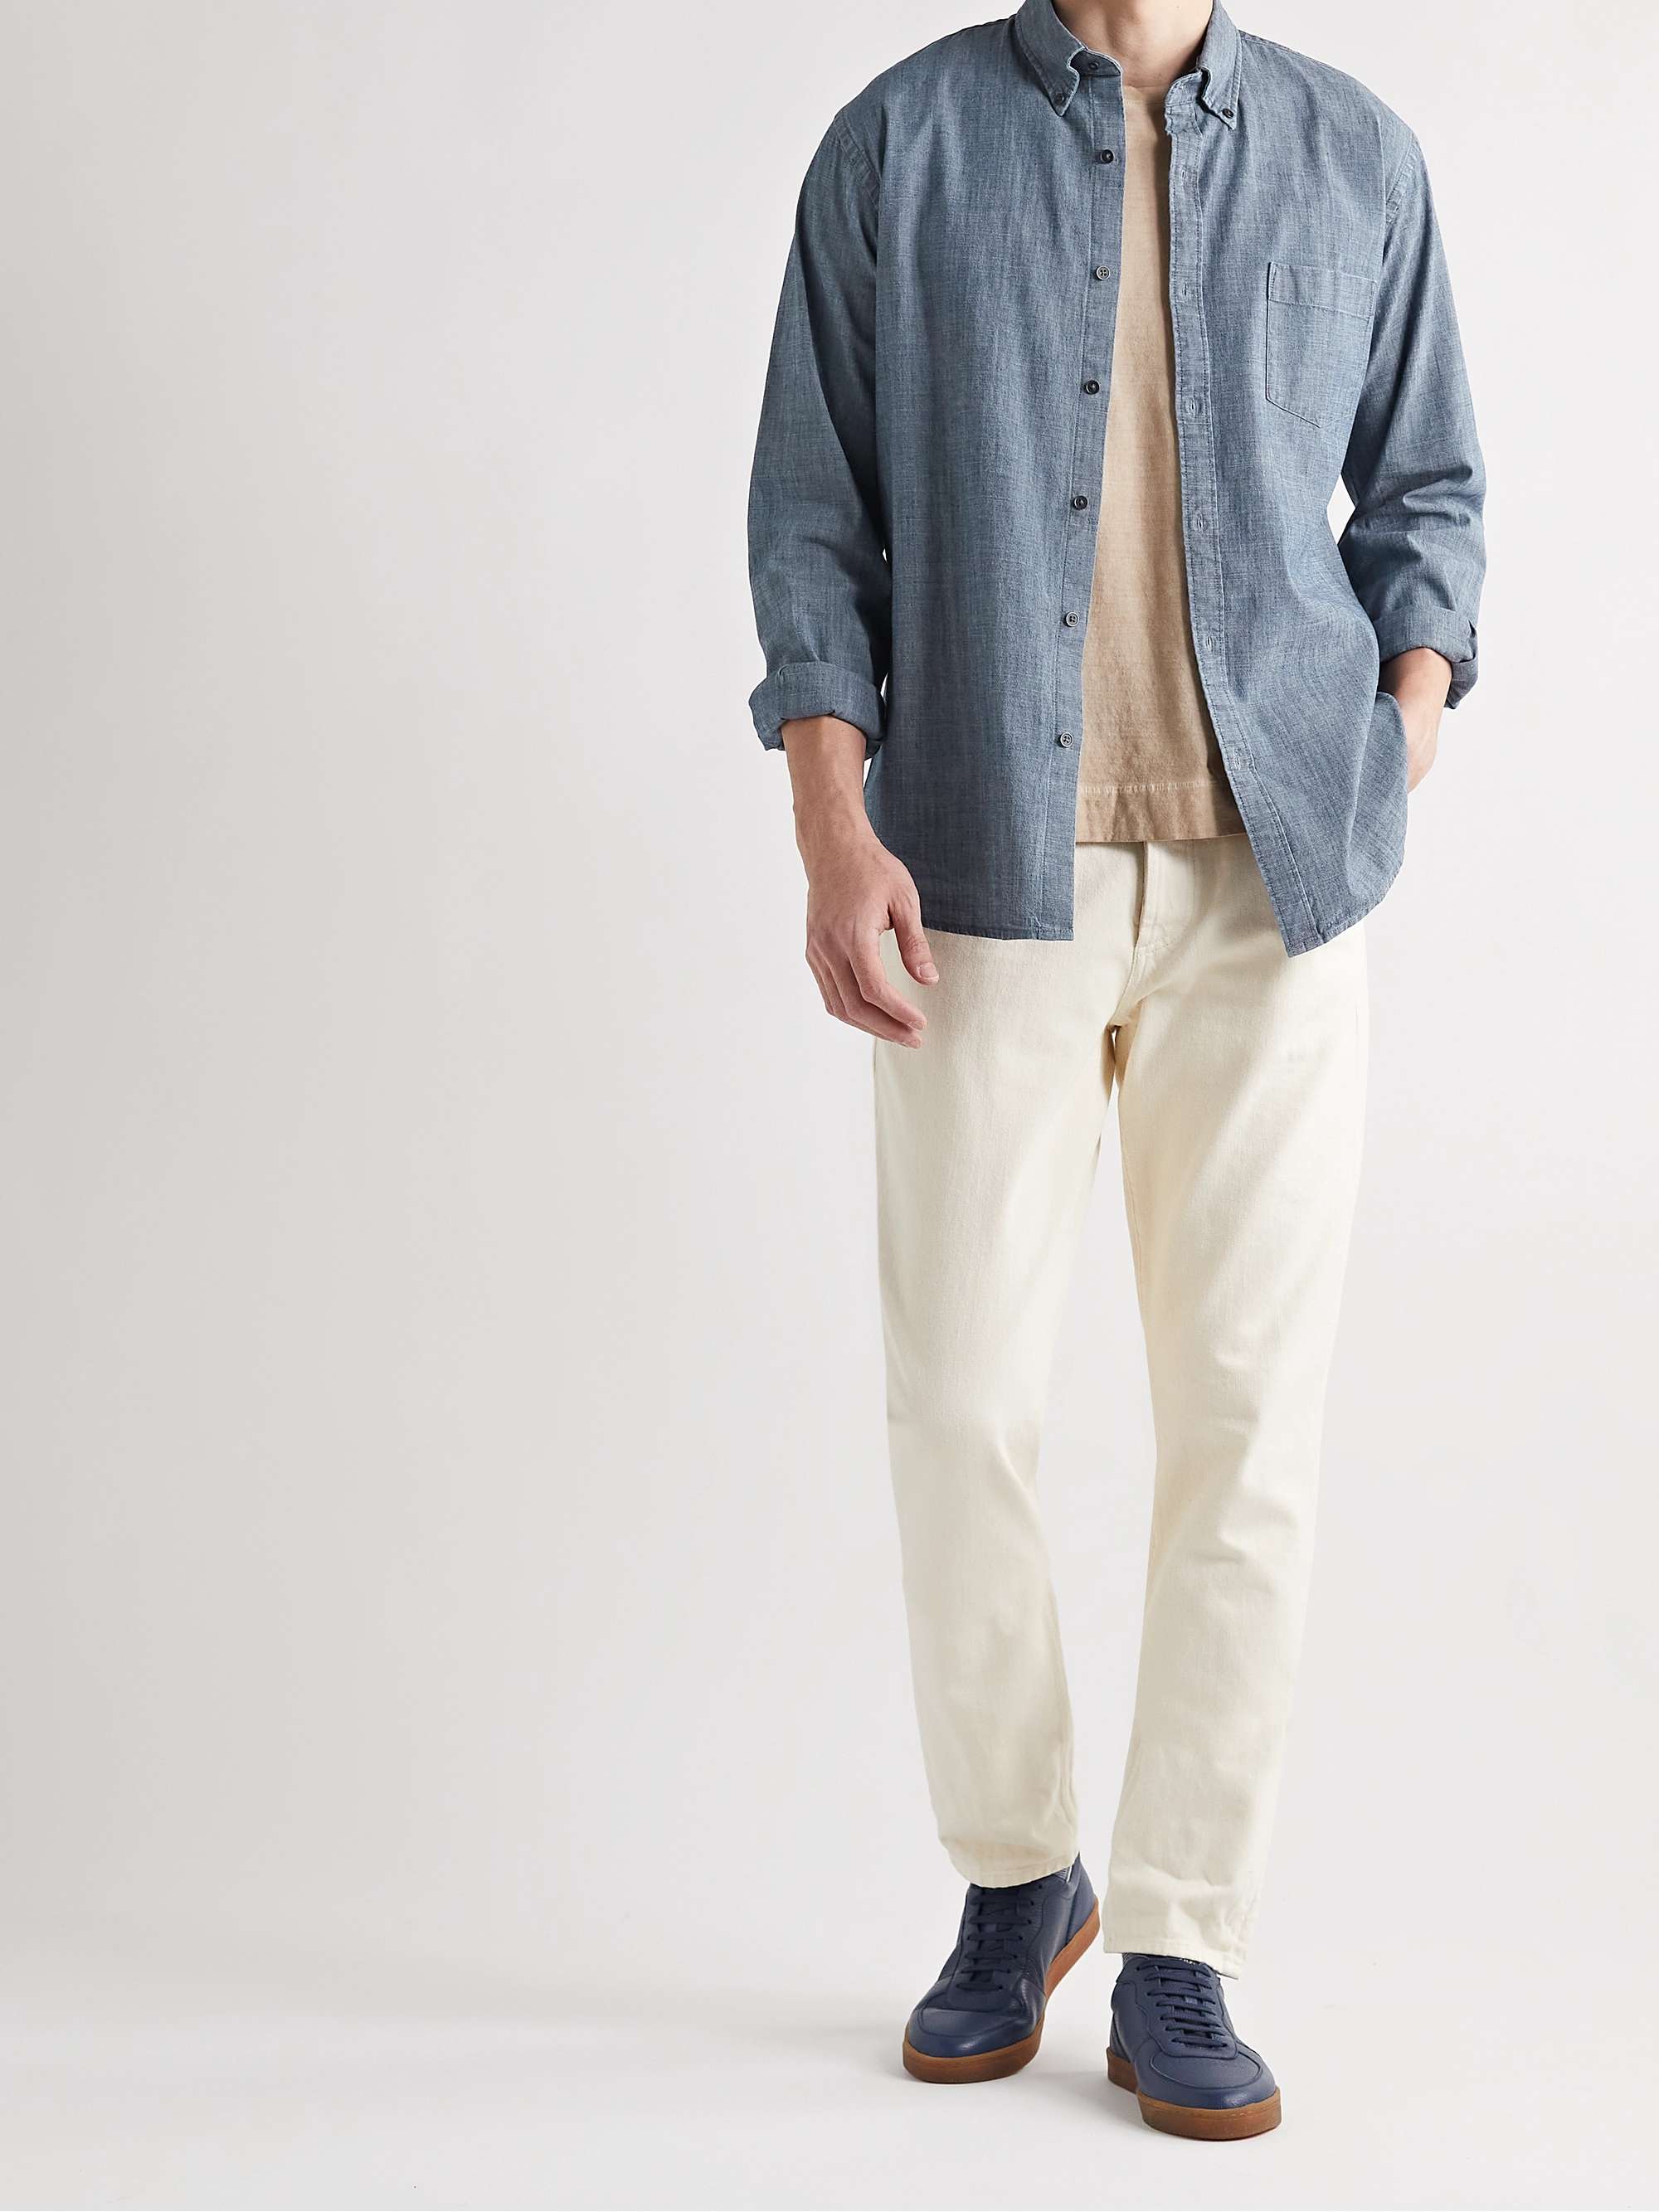 PETER MILLAR Tamworth Button-Down Collar Cotton-Blend Chambray Shirt